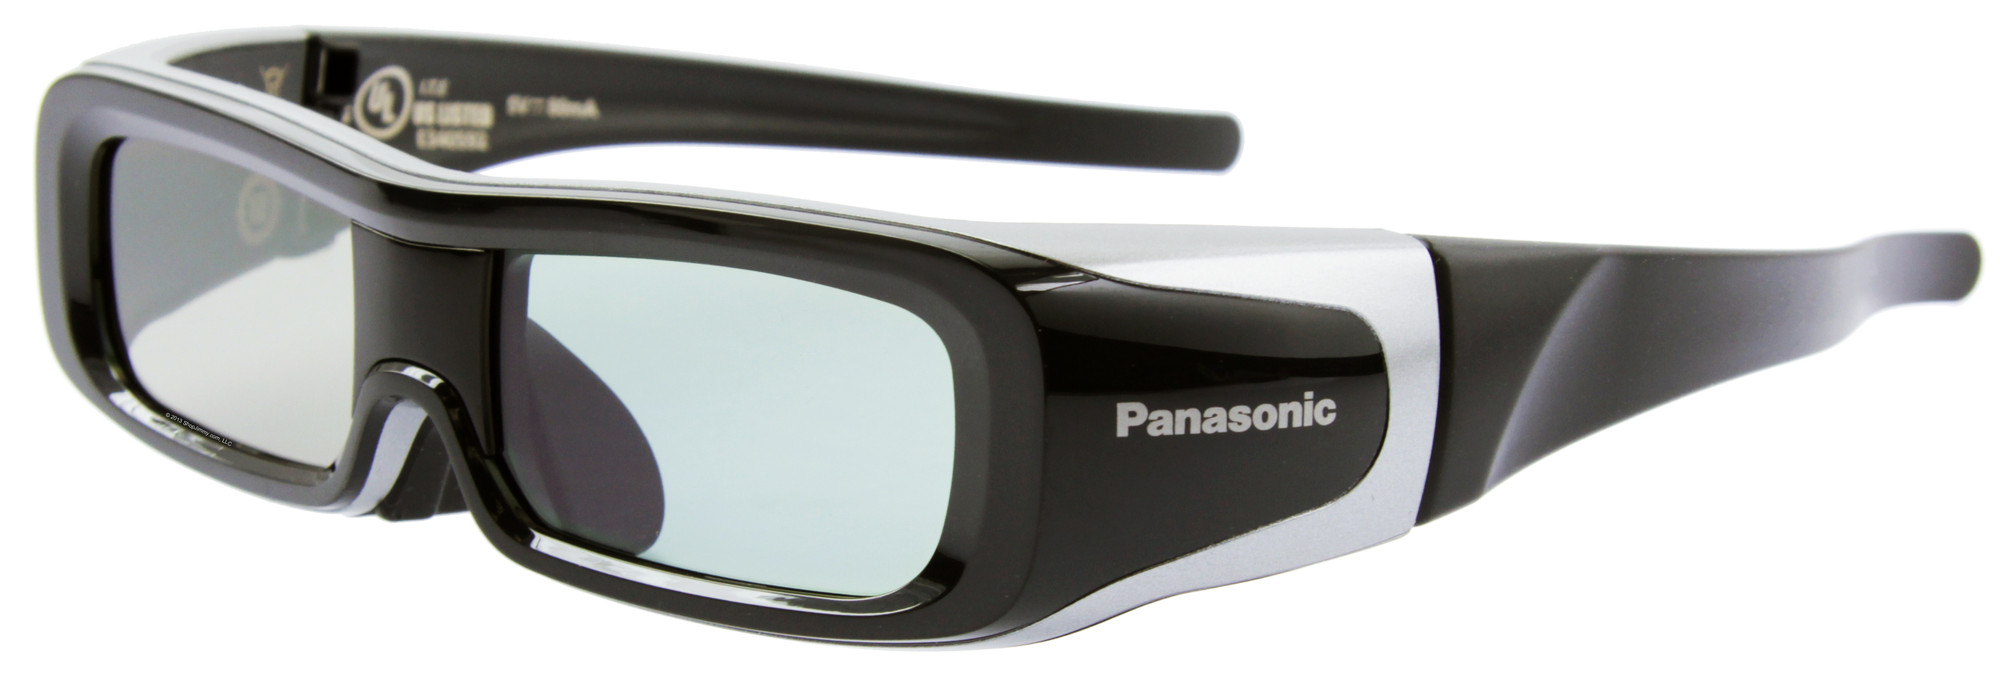 Panasonic TY-EW3D2MA Active 3D